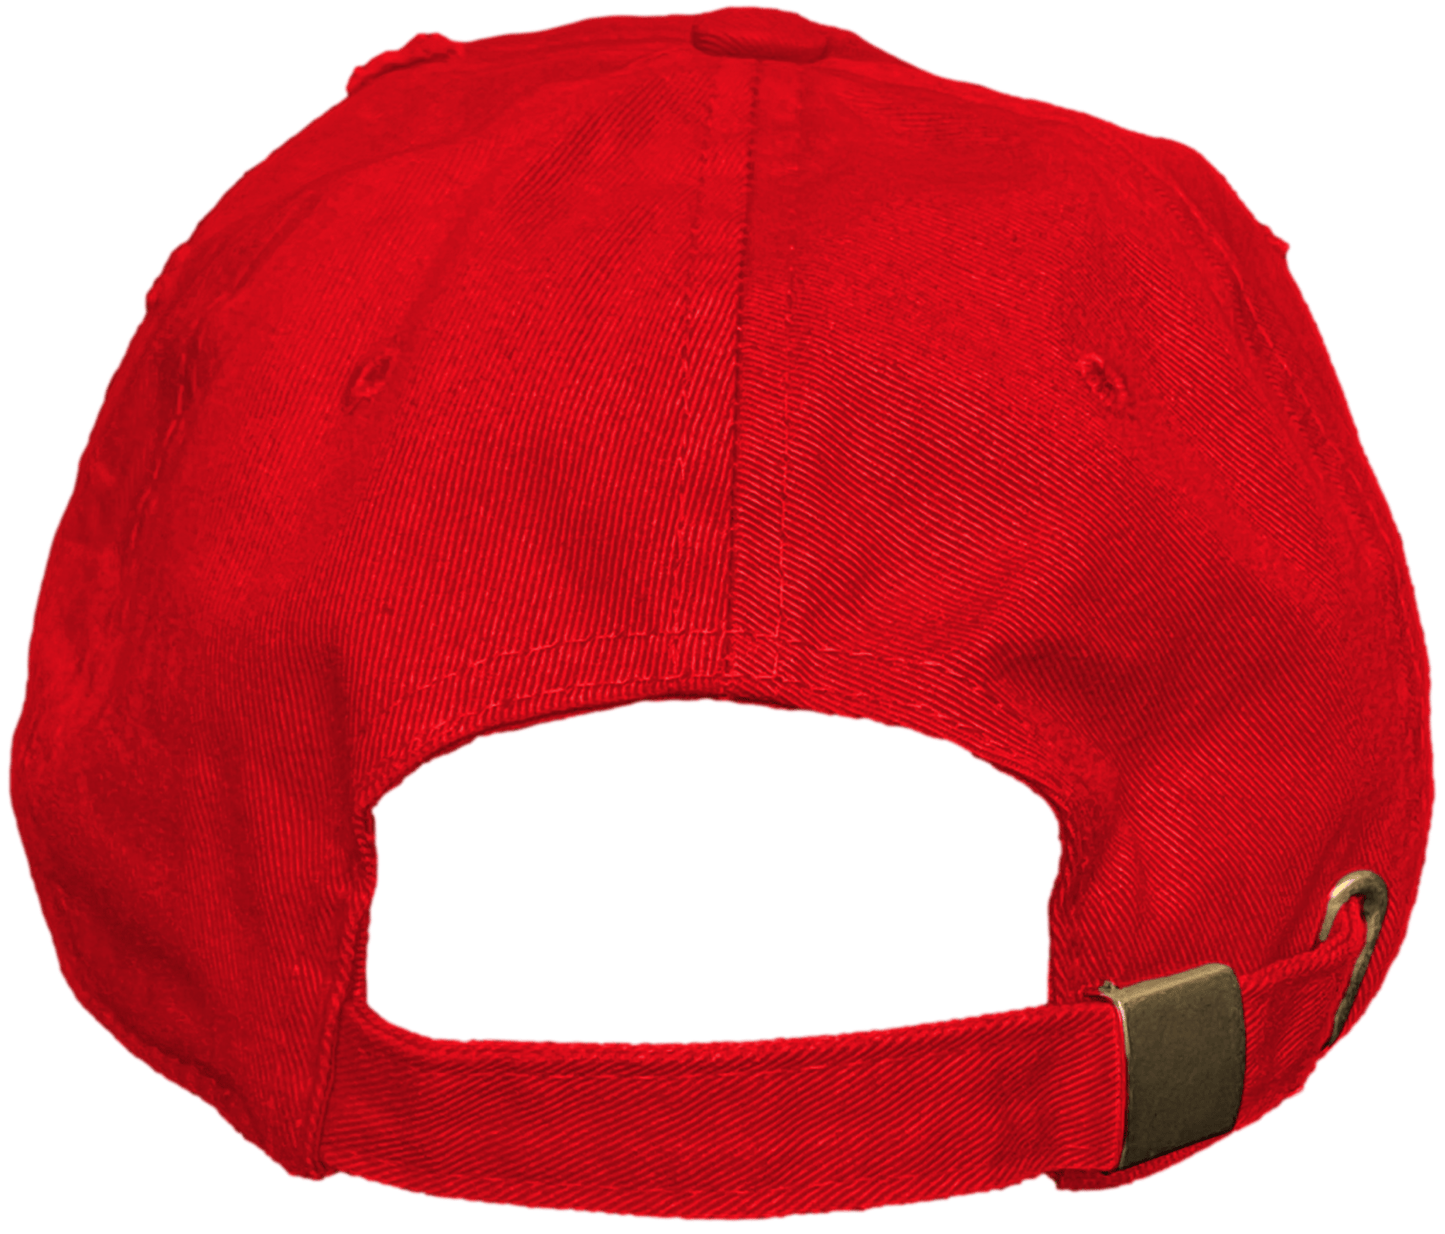 Cherry 12s Dad Hat - Jordan 12 Cherry Hats - Red F#ck